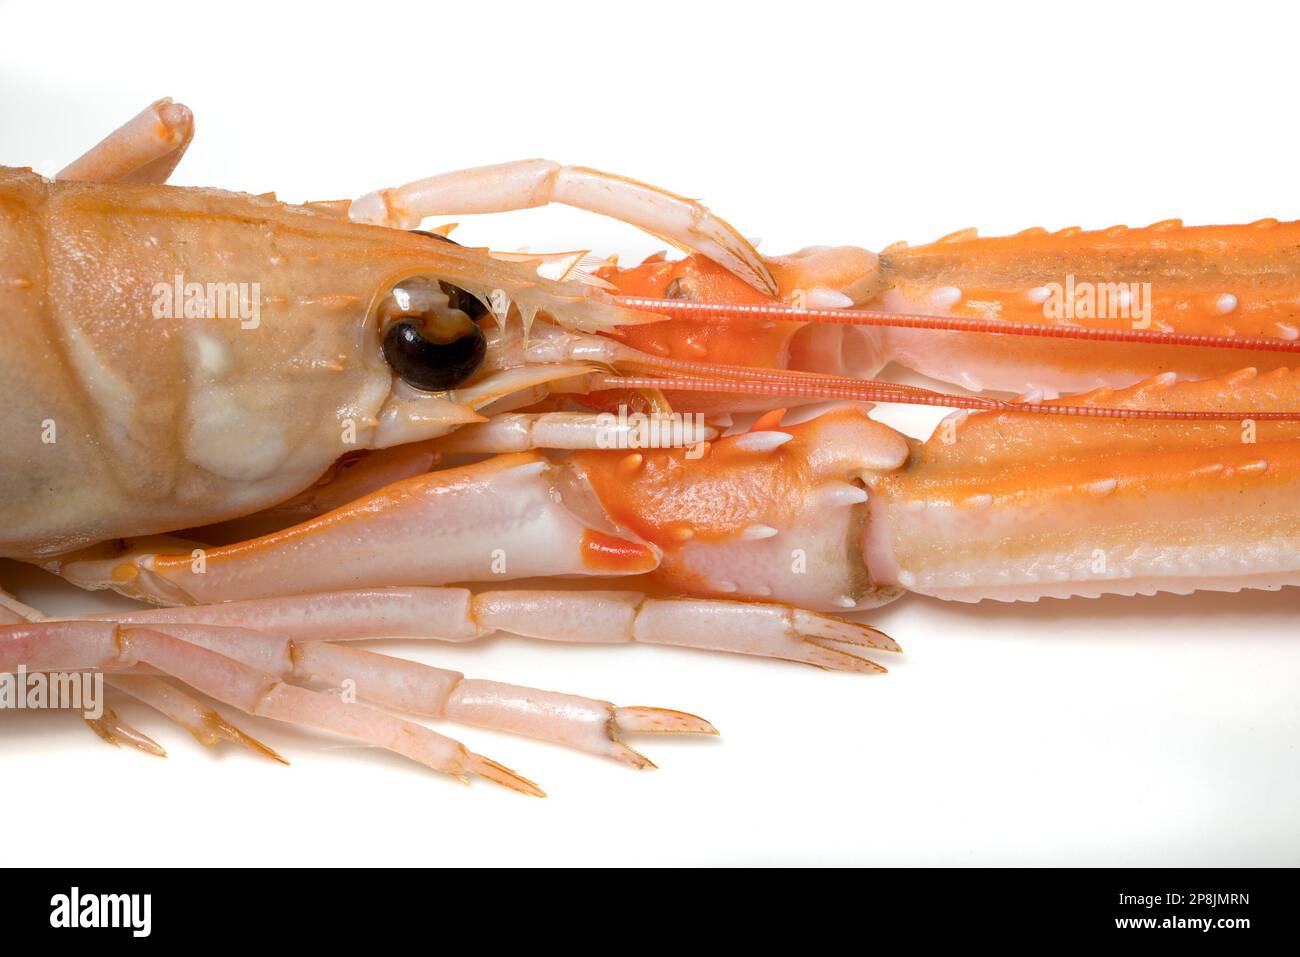 Raw Langoustine/ Norway Lobster / Dublin Bay Prawn / Scampi (Nephrops norvegicus) Stock Photo